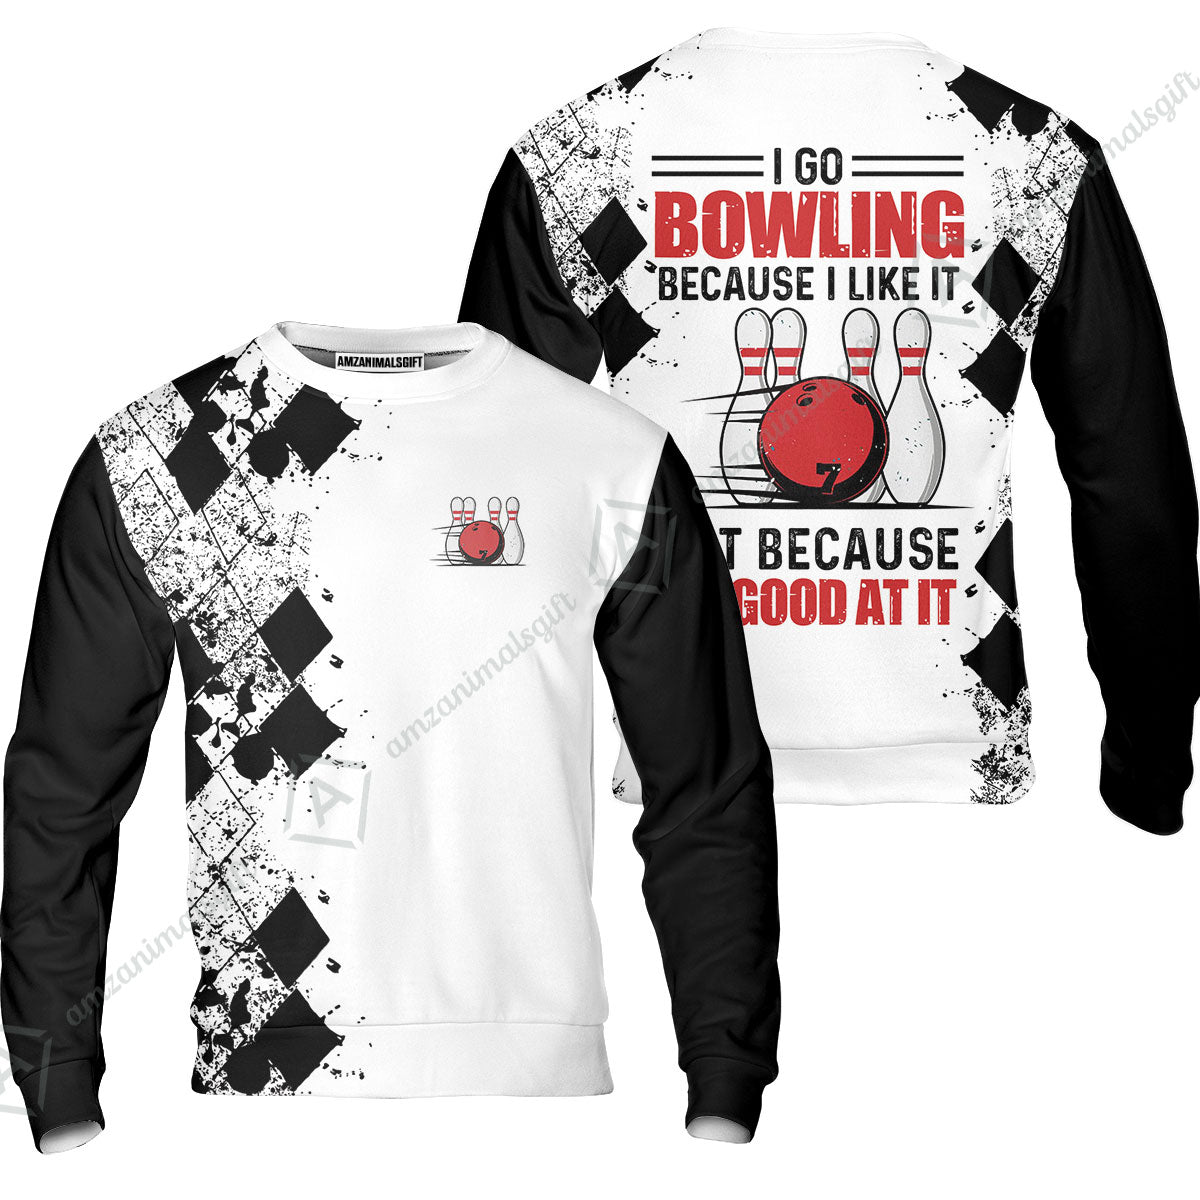 Bowling Sweatshirt - I Go Bowling Because I Like It Sweatshirt, Black Argyle Pattern Shirt Design, Best Bowling Shirt